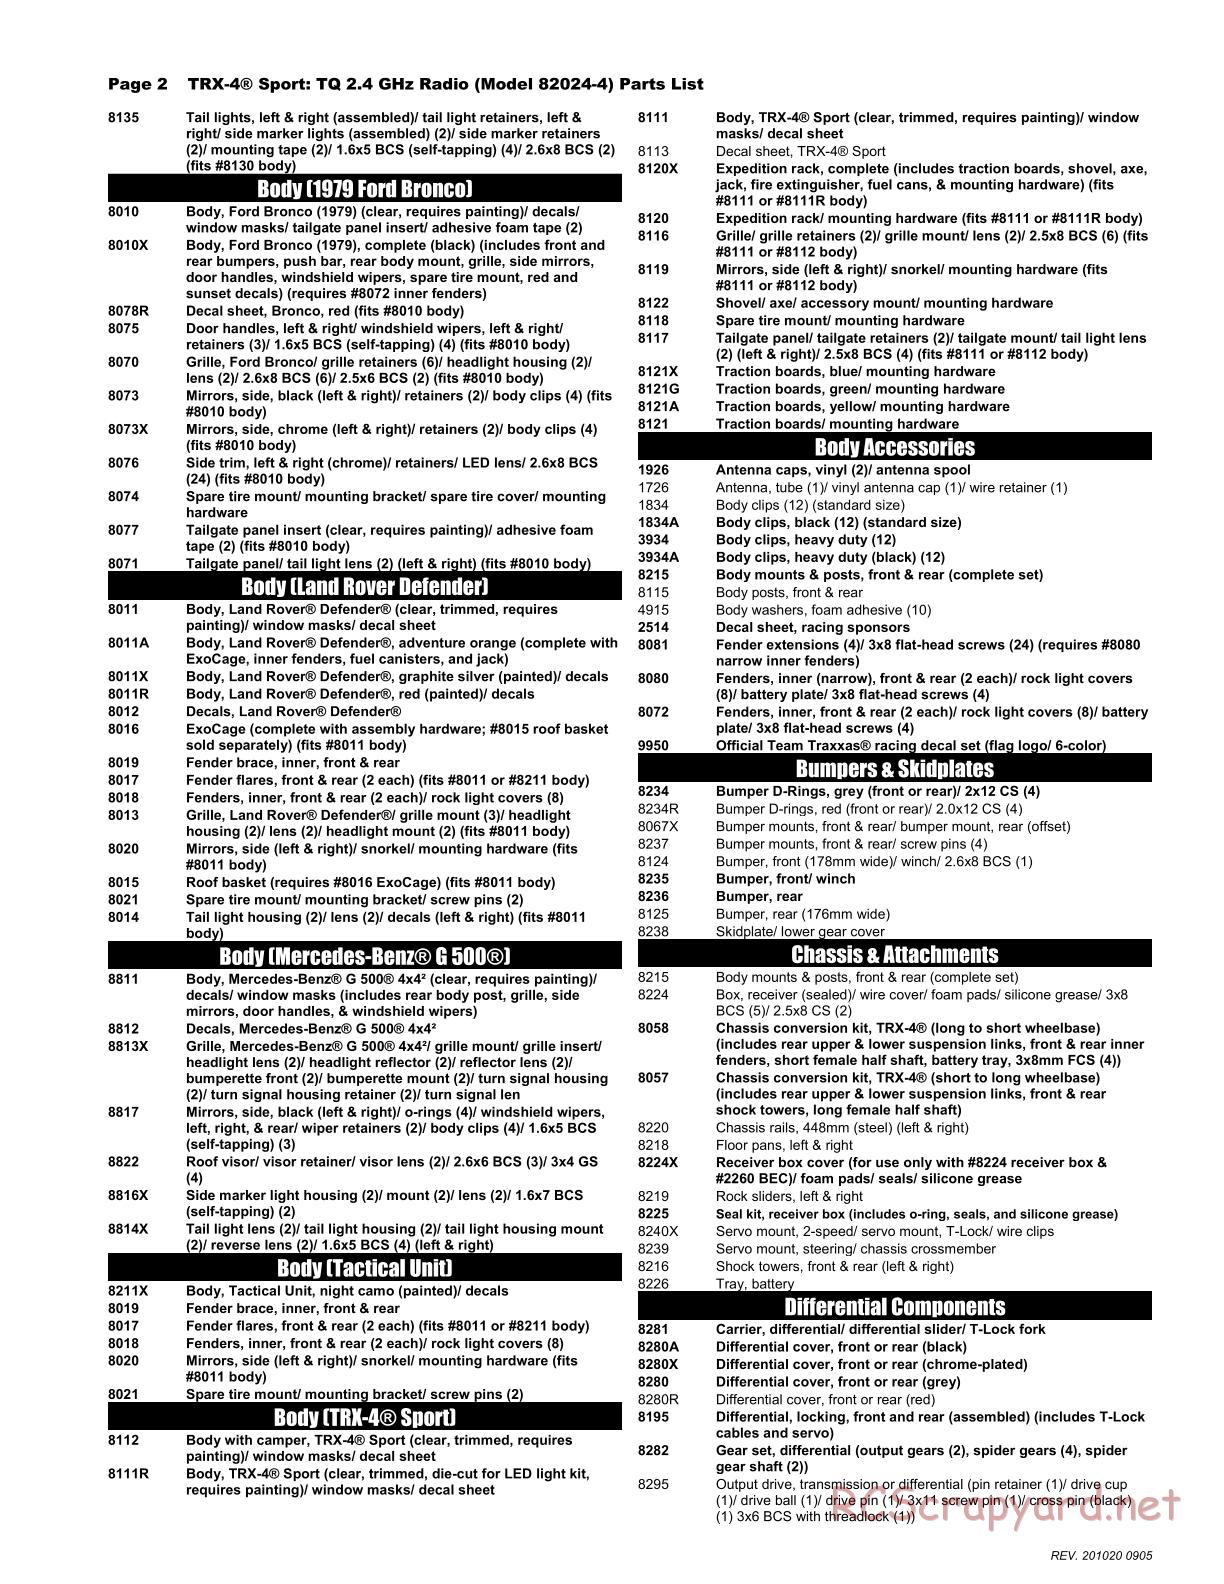 Traxxas - TRX-4 Sport - Parts List - Page 2